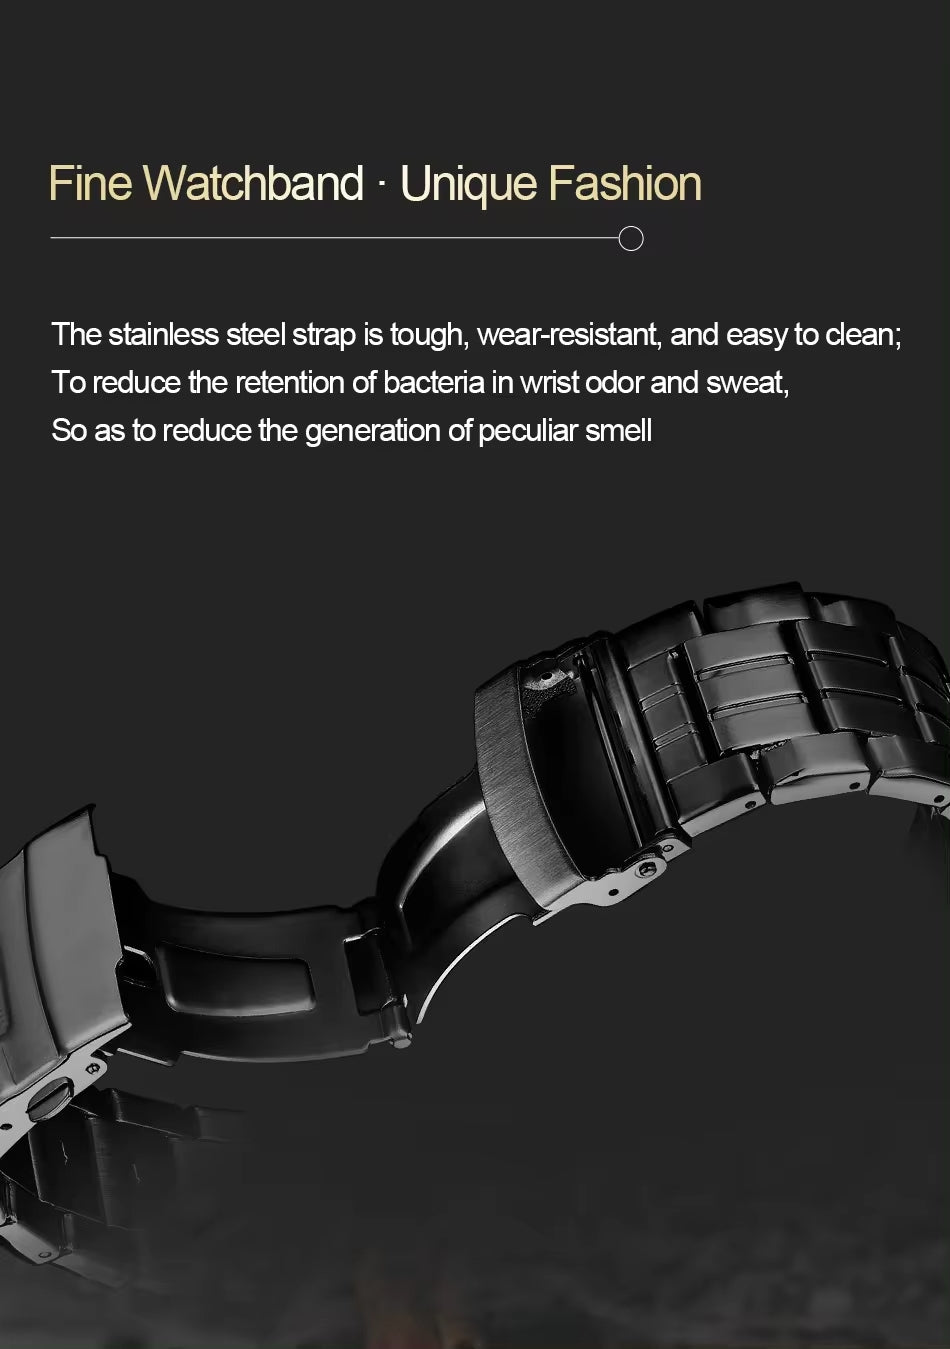 NAVIFORCE NF9197S RG-B-B Black Dual Time Watch For Men